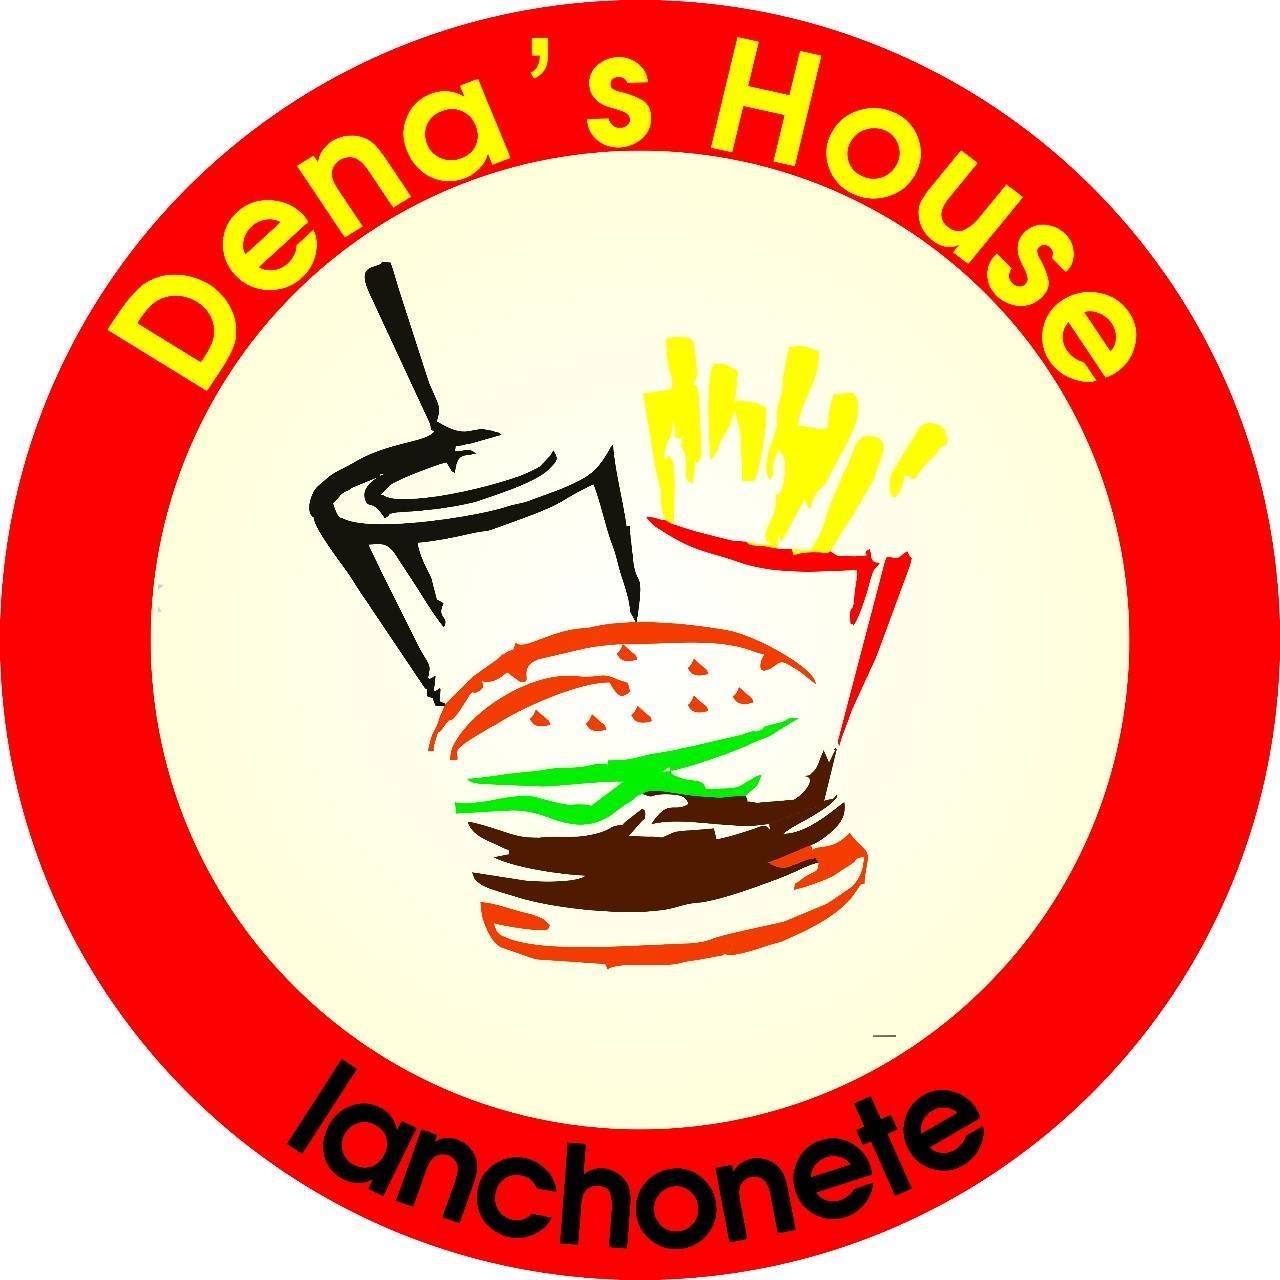 Dena's House